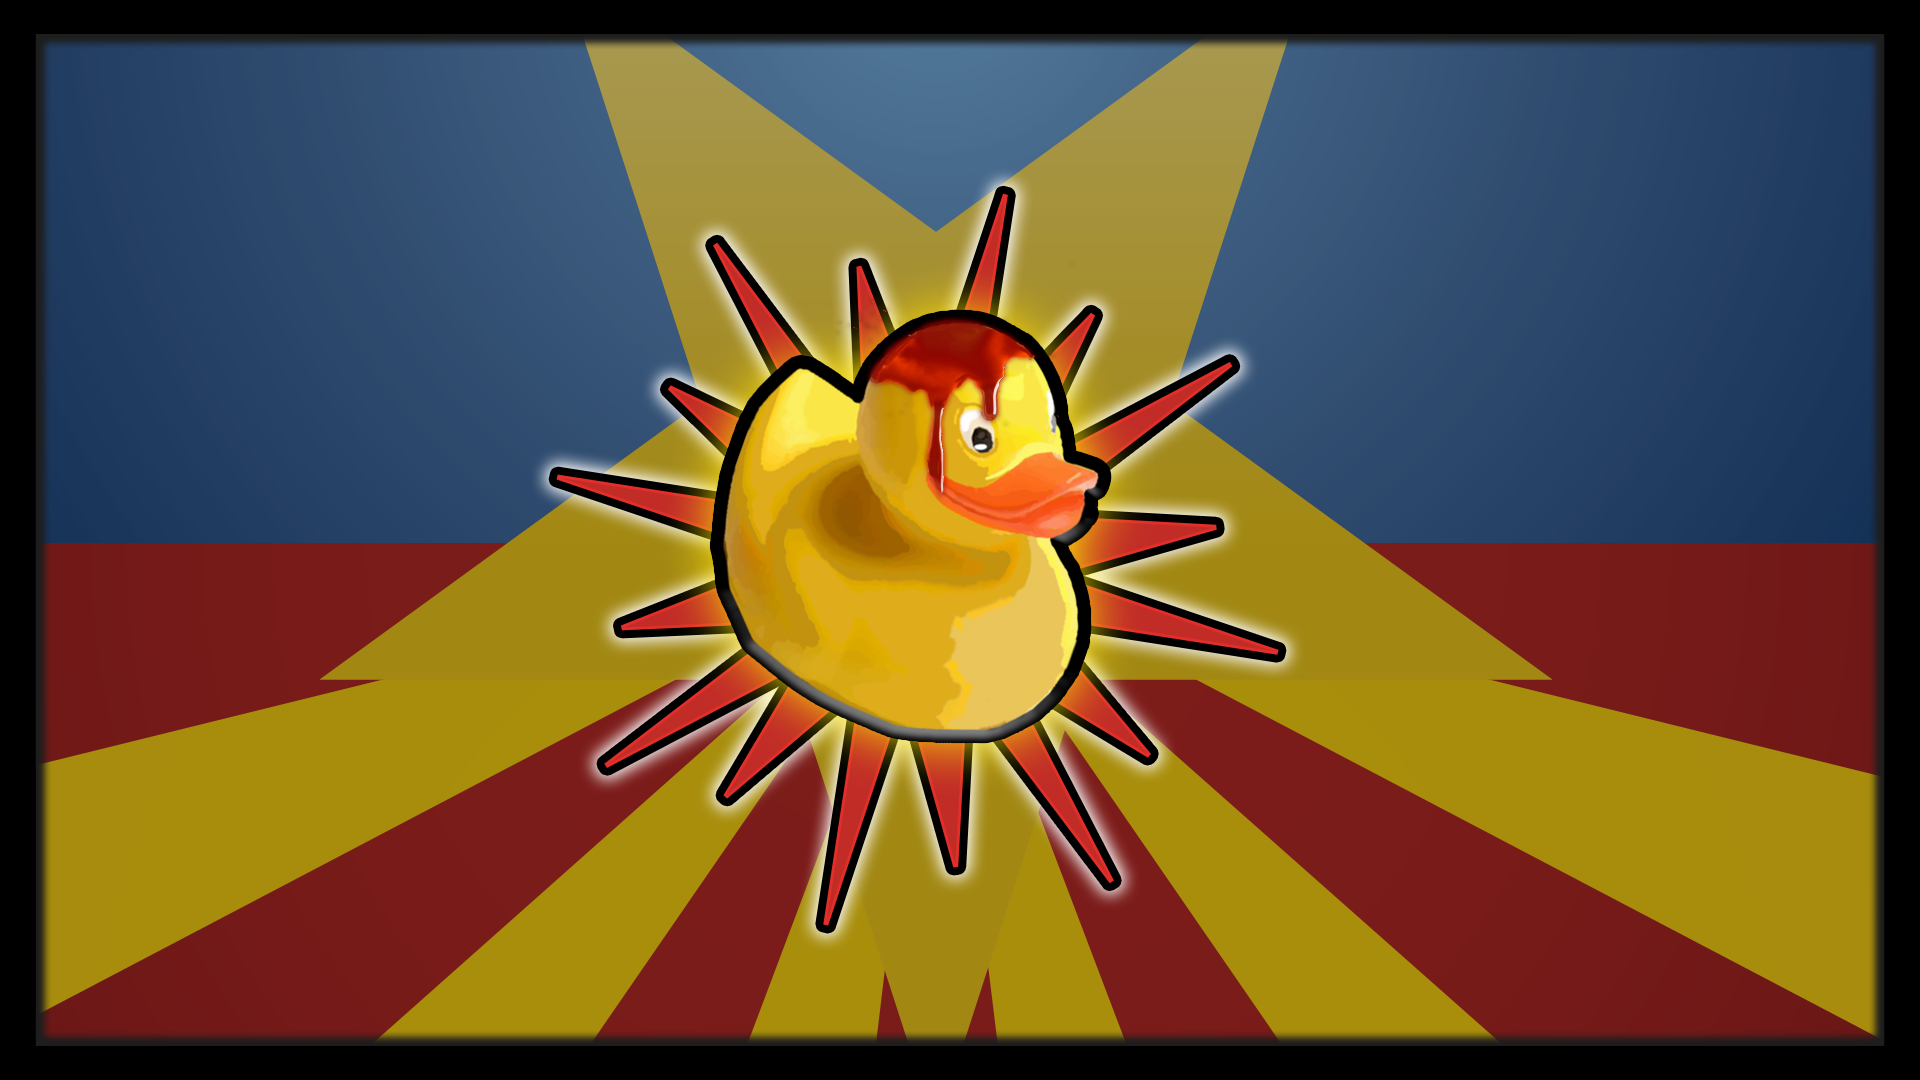 Icon for Duck Attack!